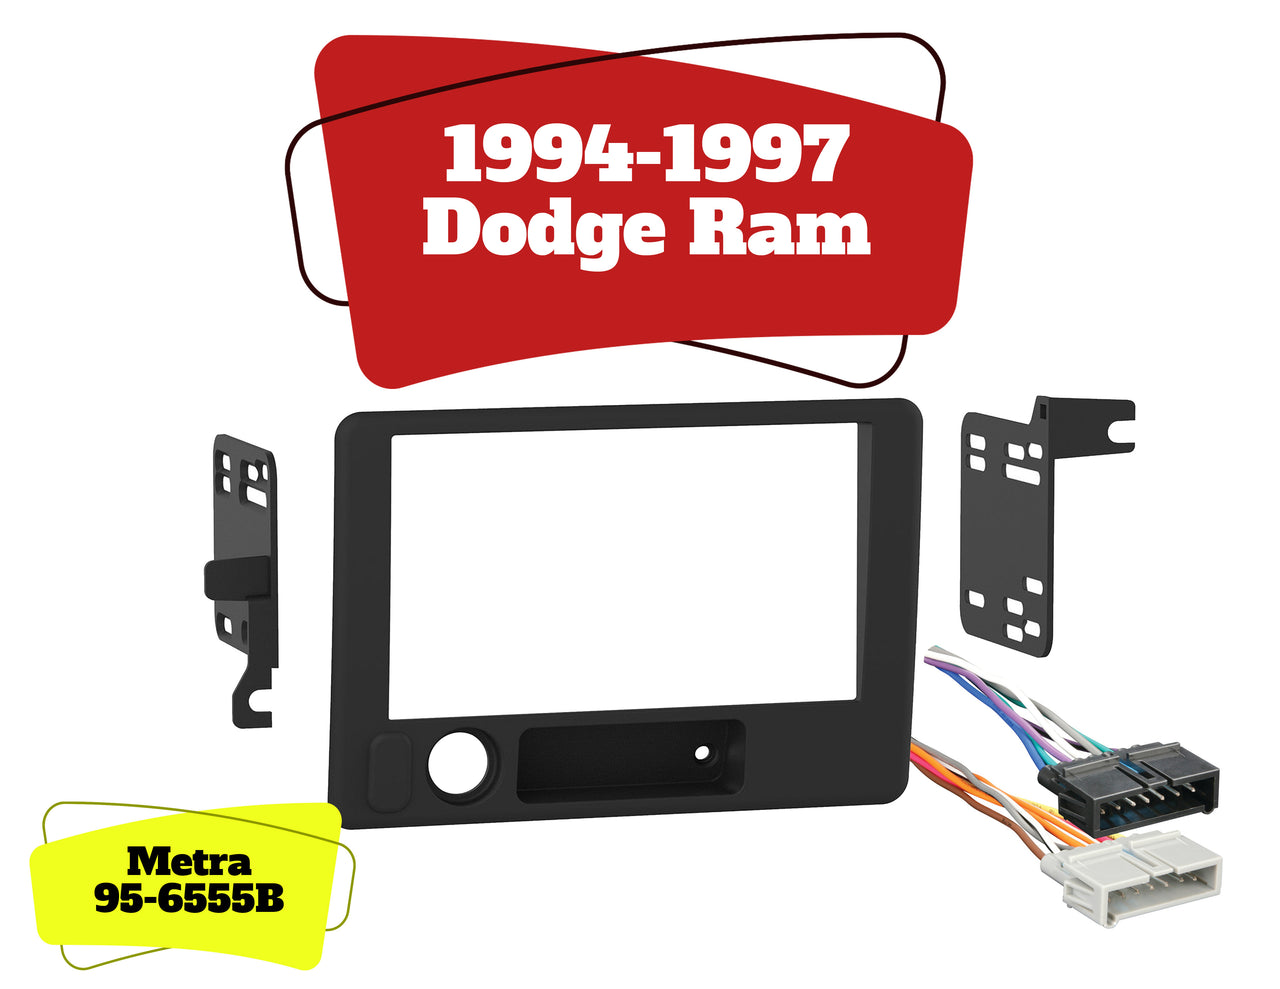 94-97 Dodge Ram Double Din Car Radio Stereo Installation Dash Kit  95-6555B 70-1817